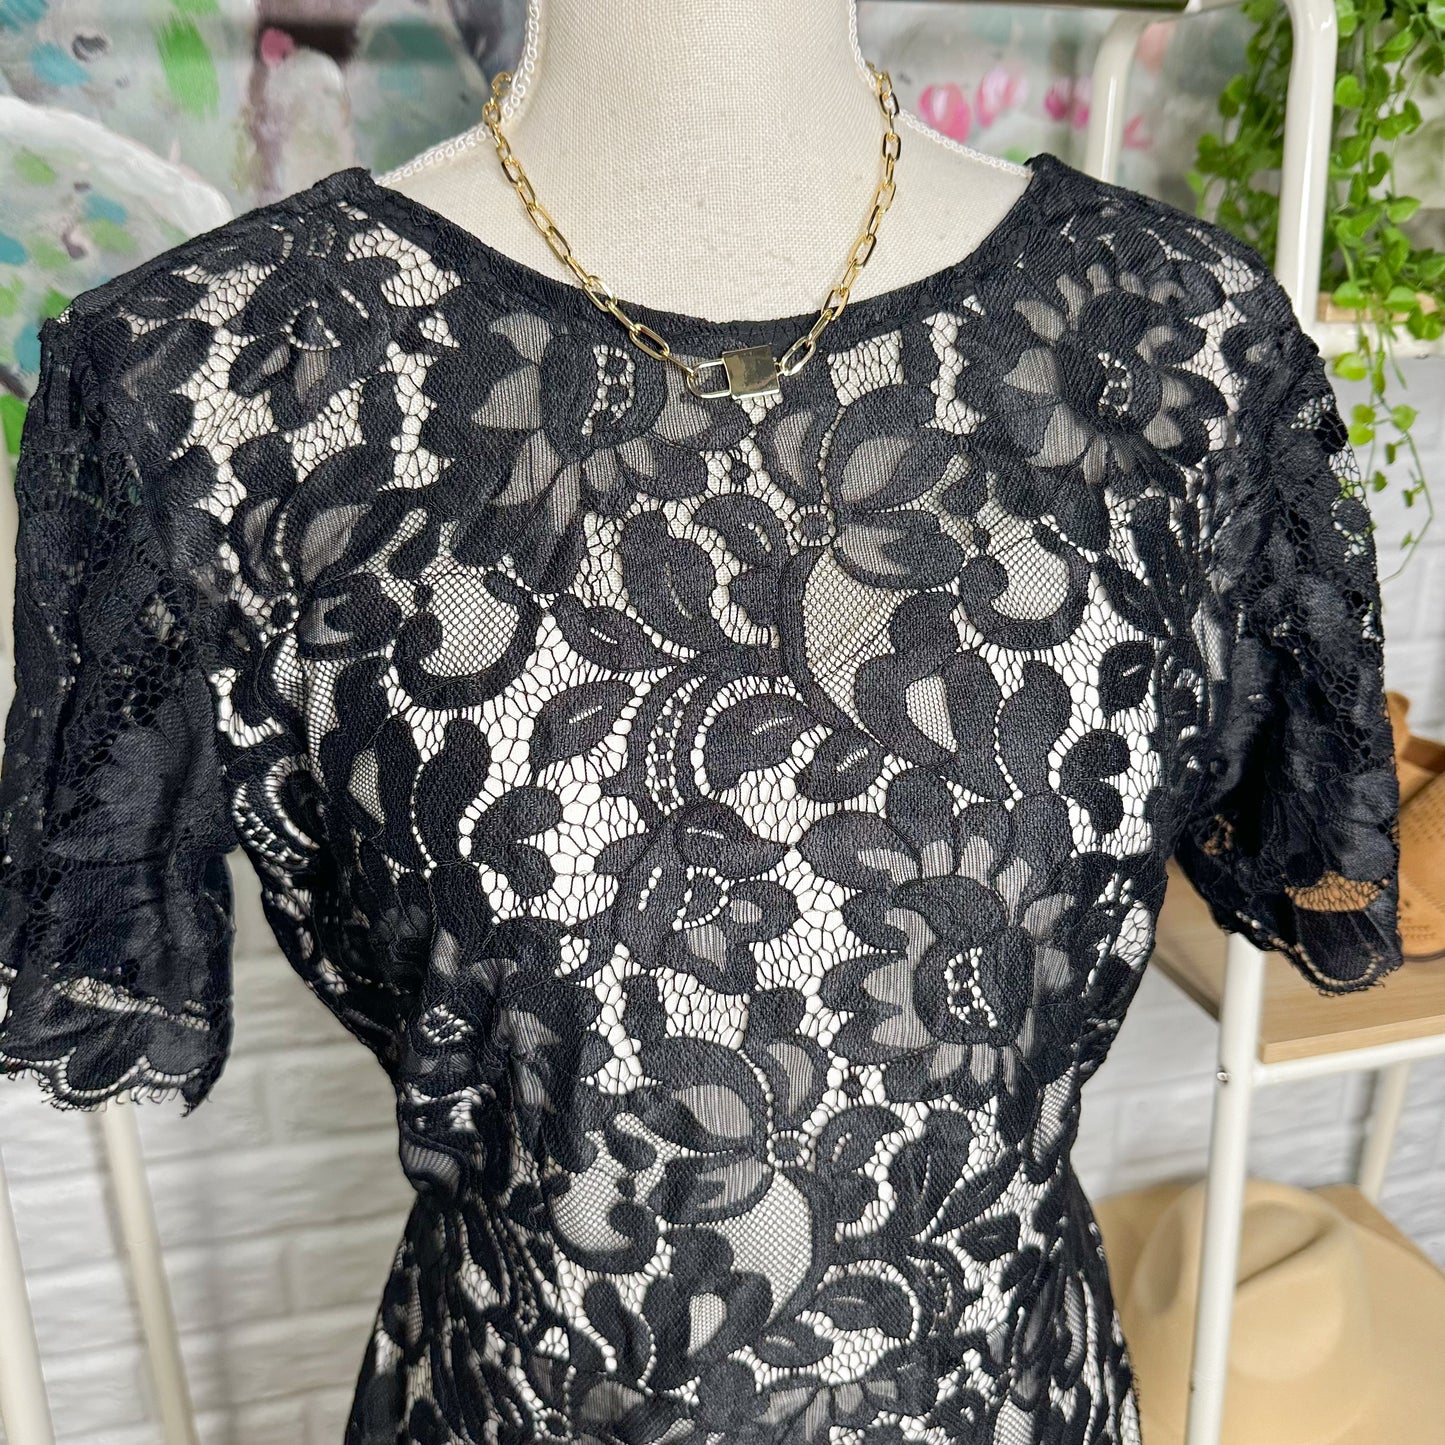 MSLG Black Lace Party Dress Size Medium